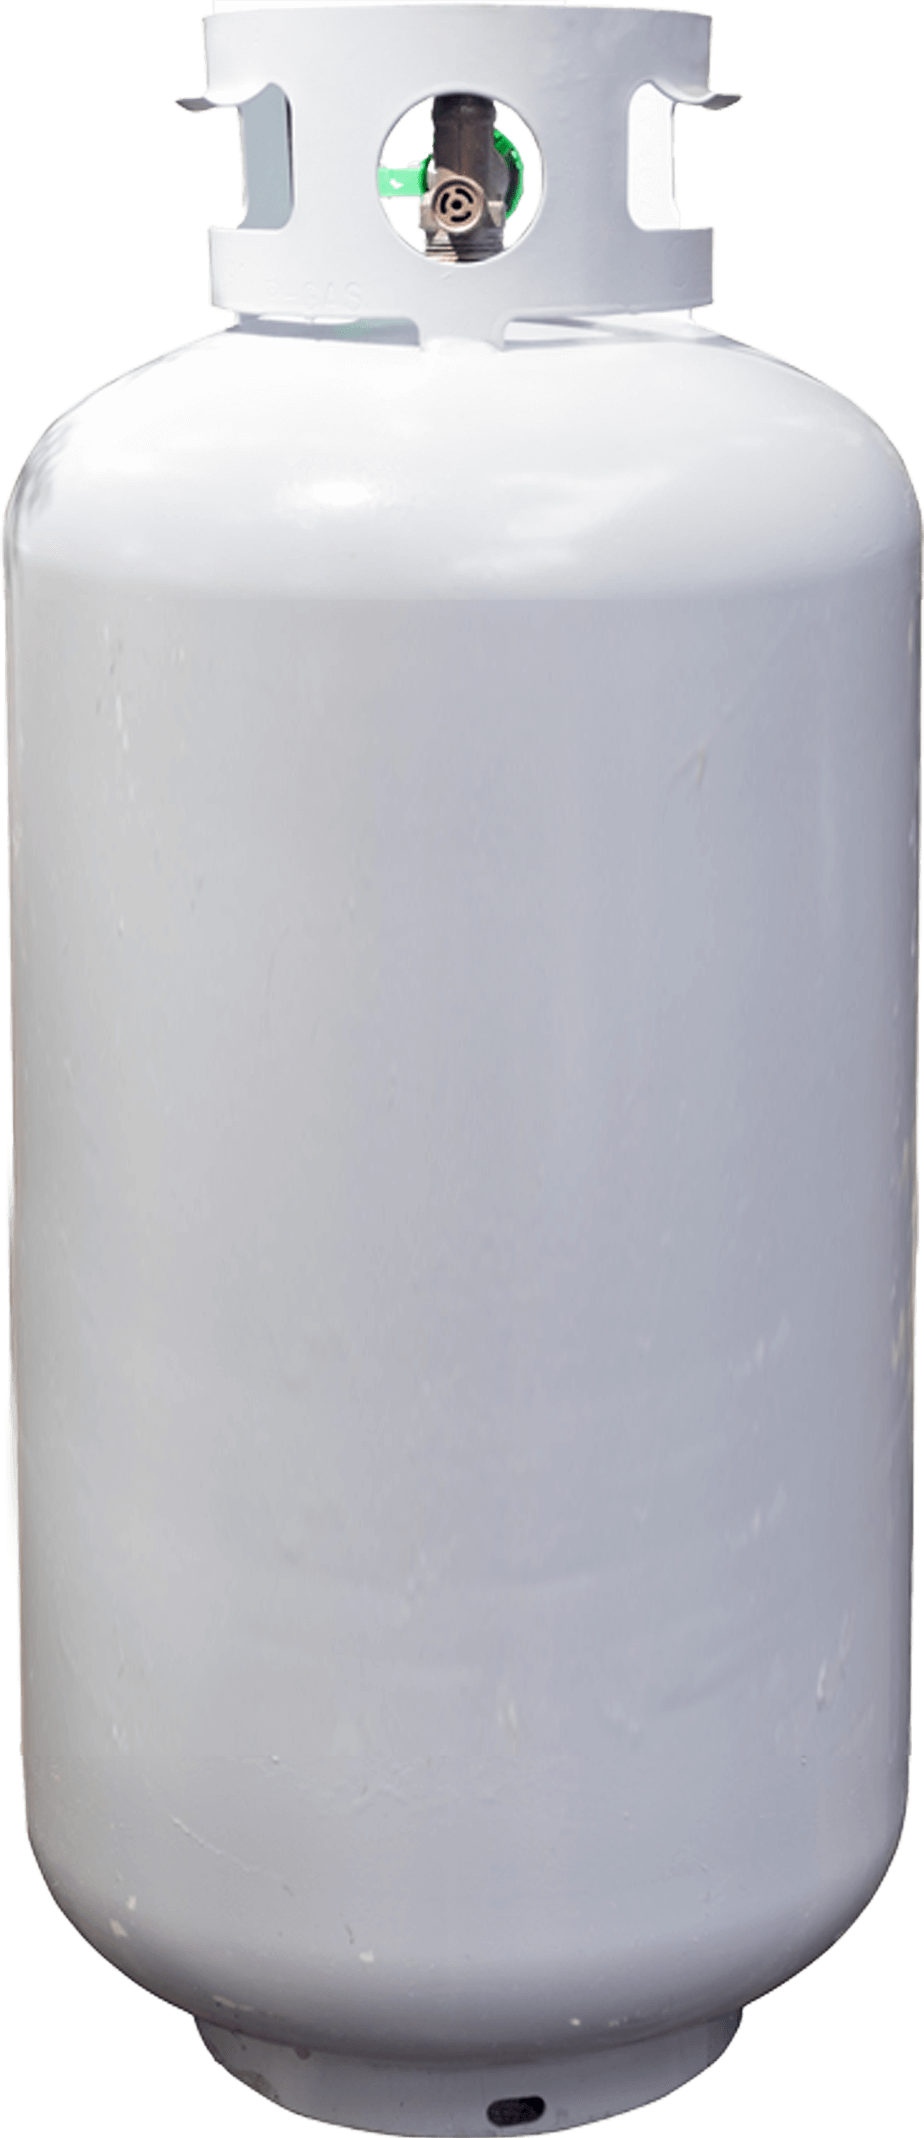 40 pound propane cylinder - 10 gallon